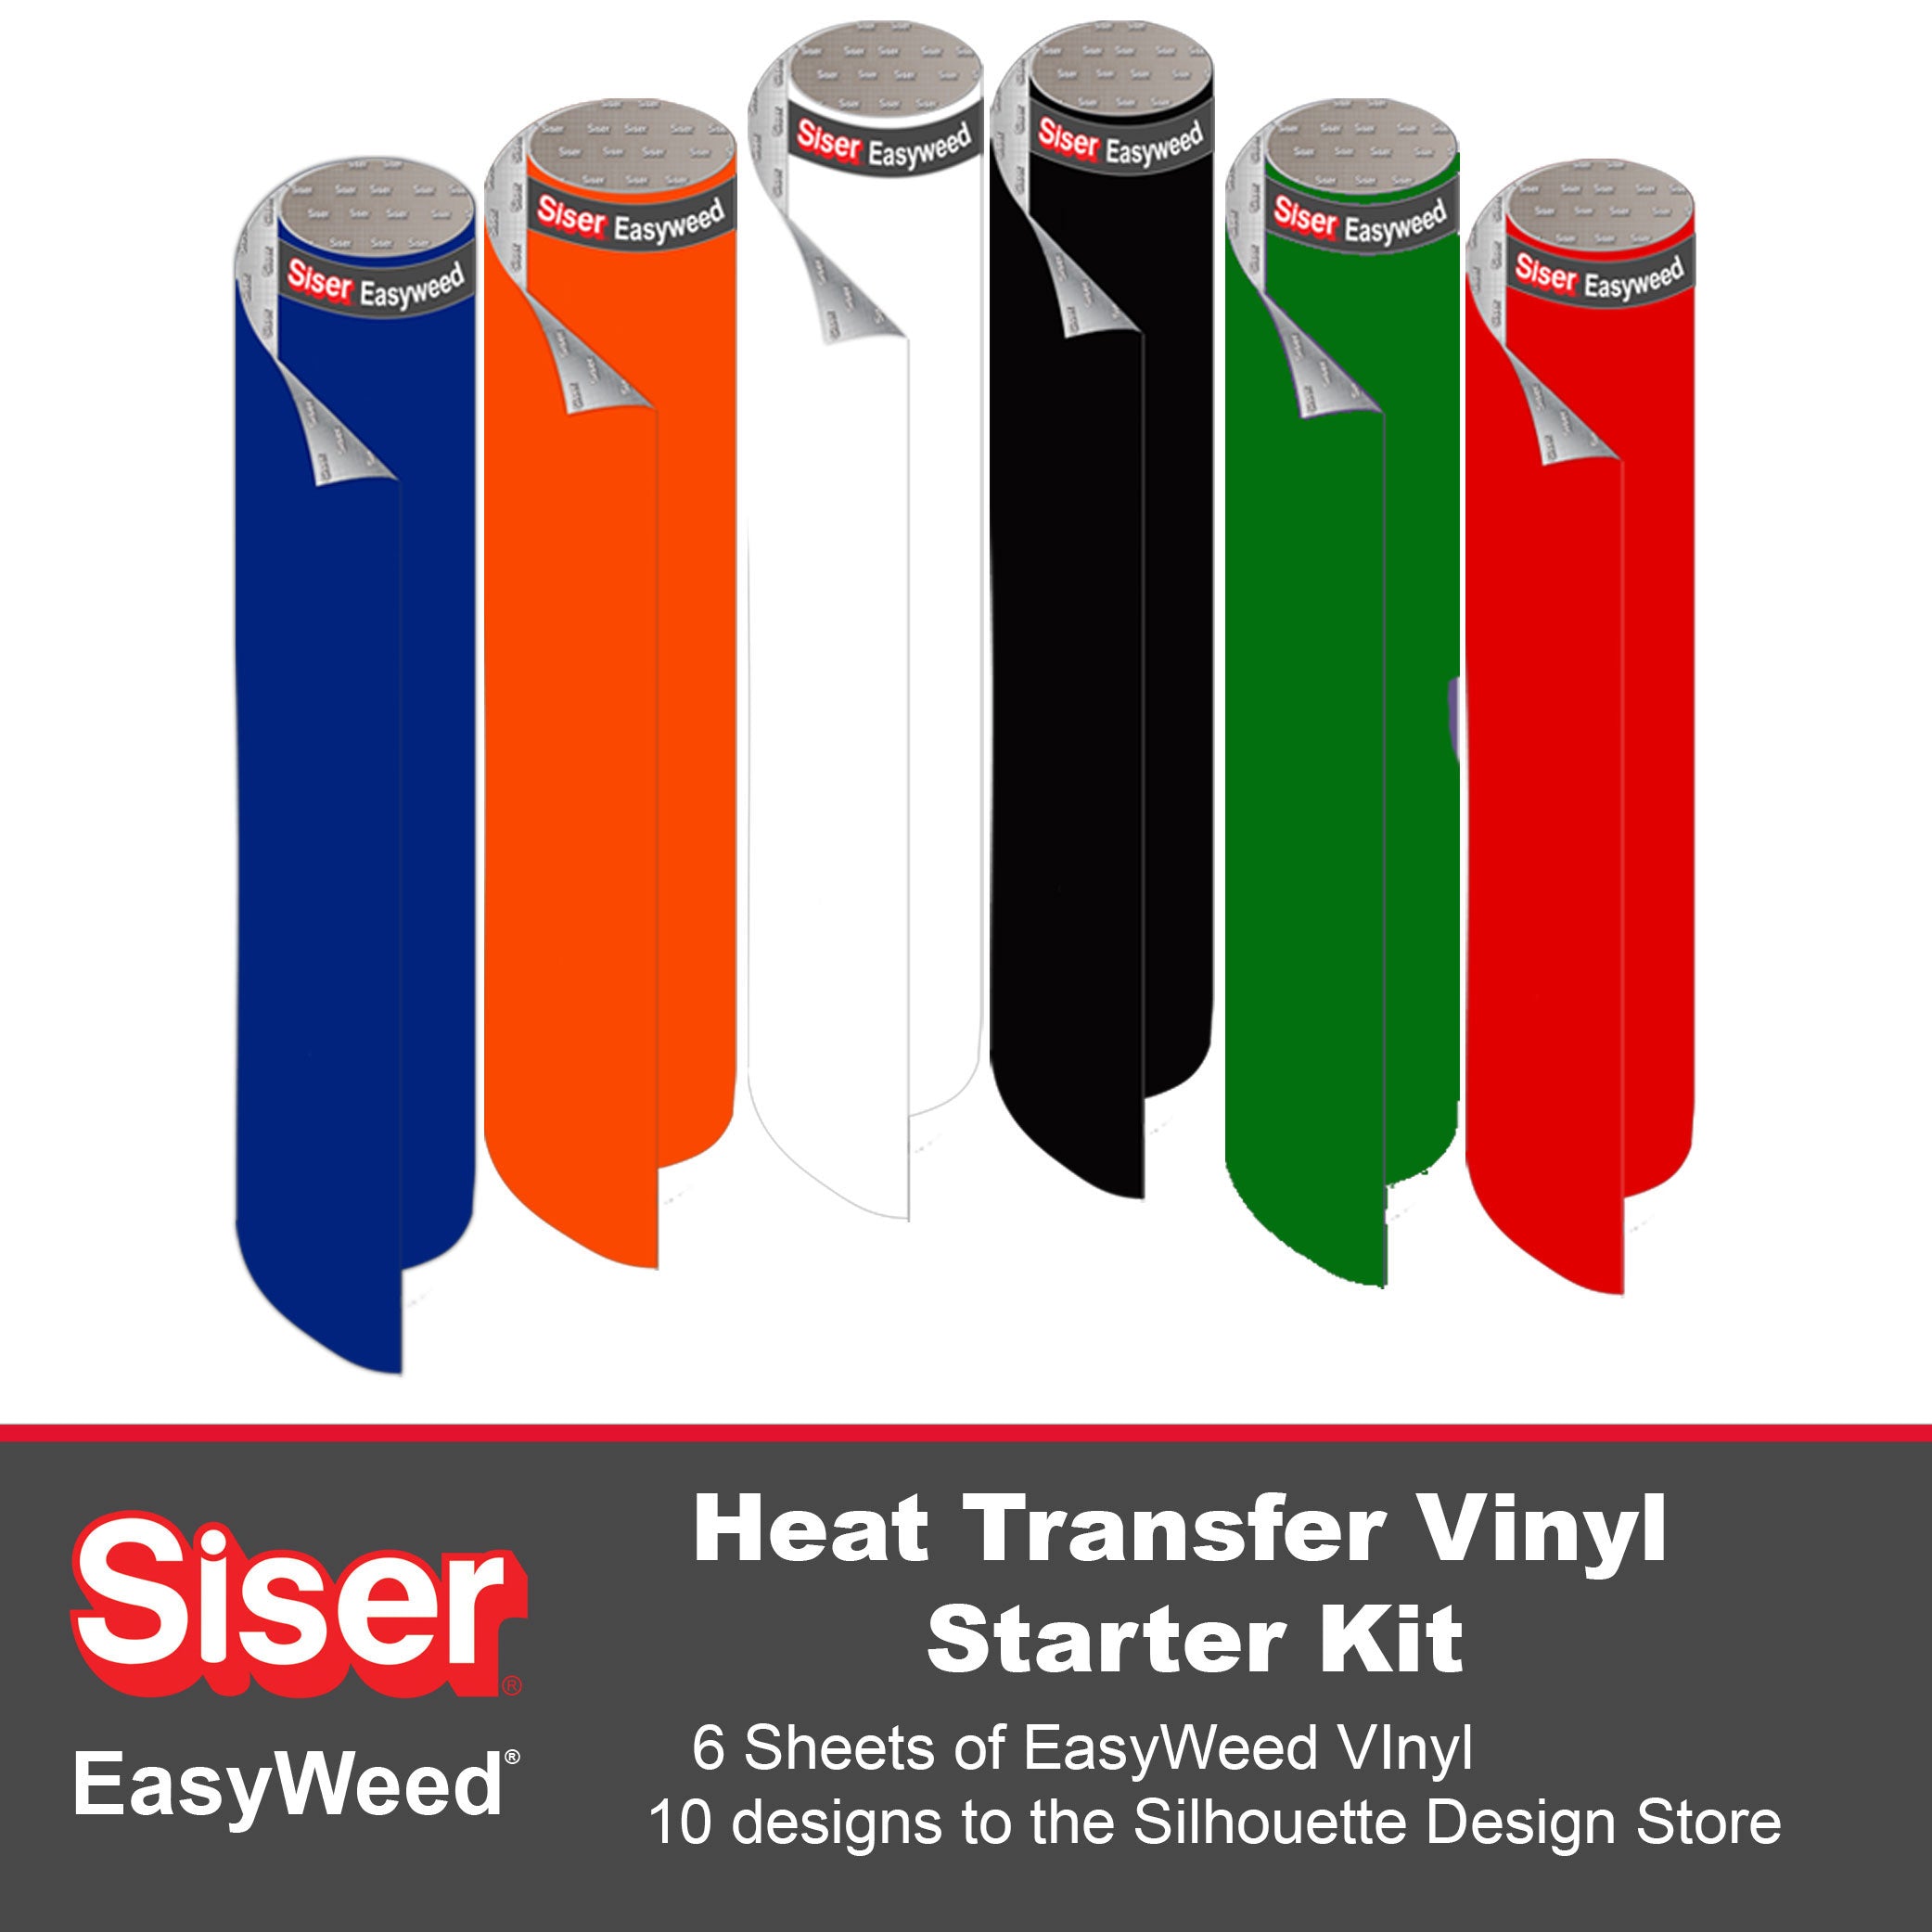 Silhouette Cameo 4 Black Bundle with Vinyl Starter Kit, Heat Transfer  Starter Kit, 2 Autoblade-2, CrafterCuts Vinyl Tool Kit, 120 Designs, and  Access